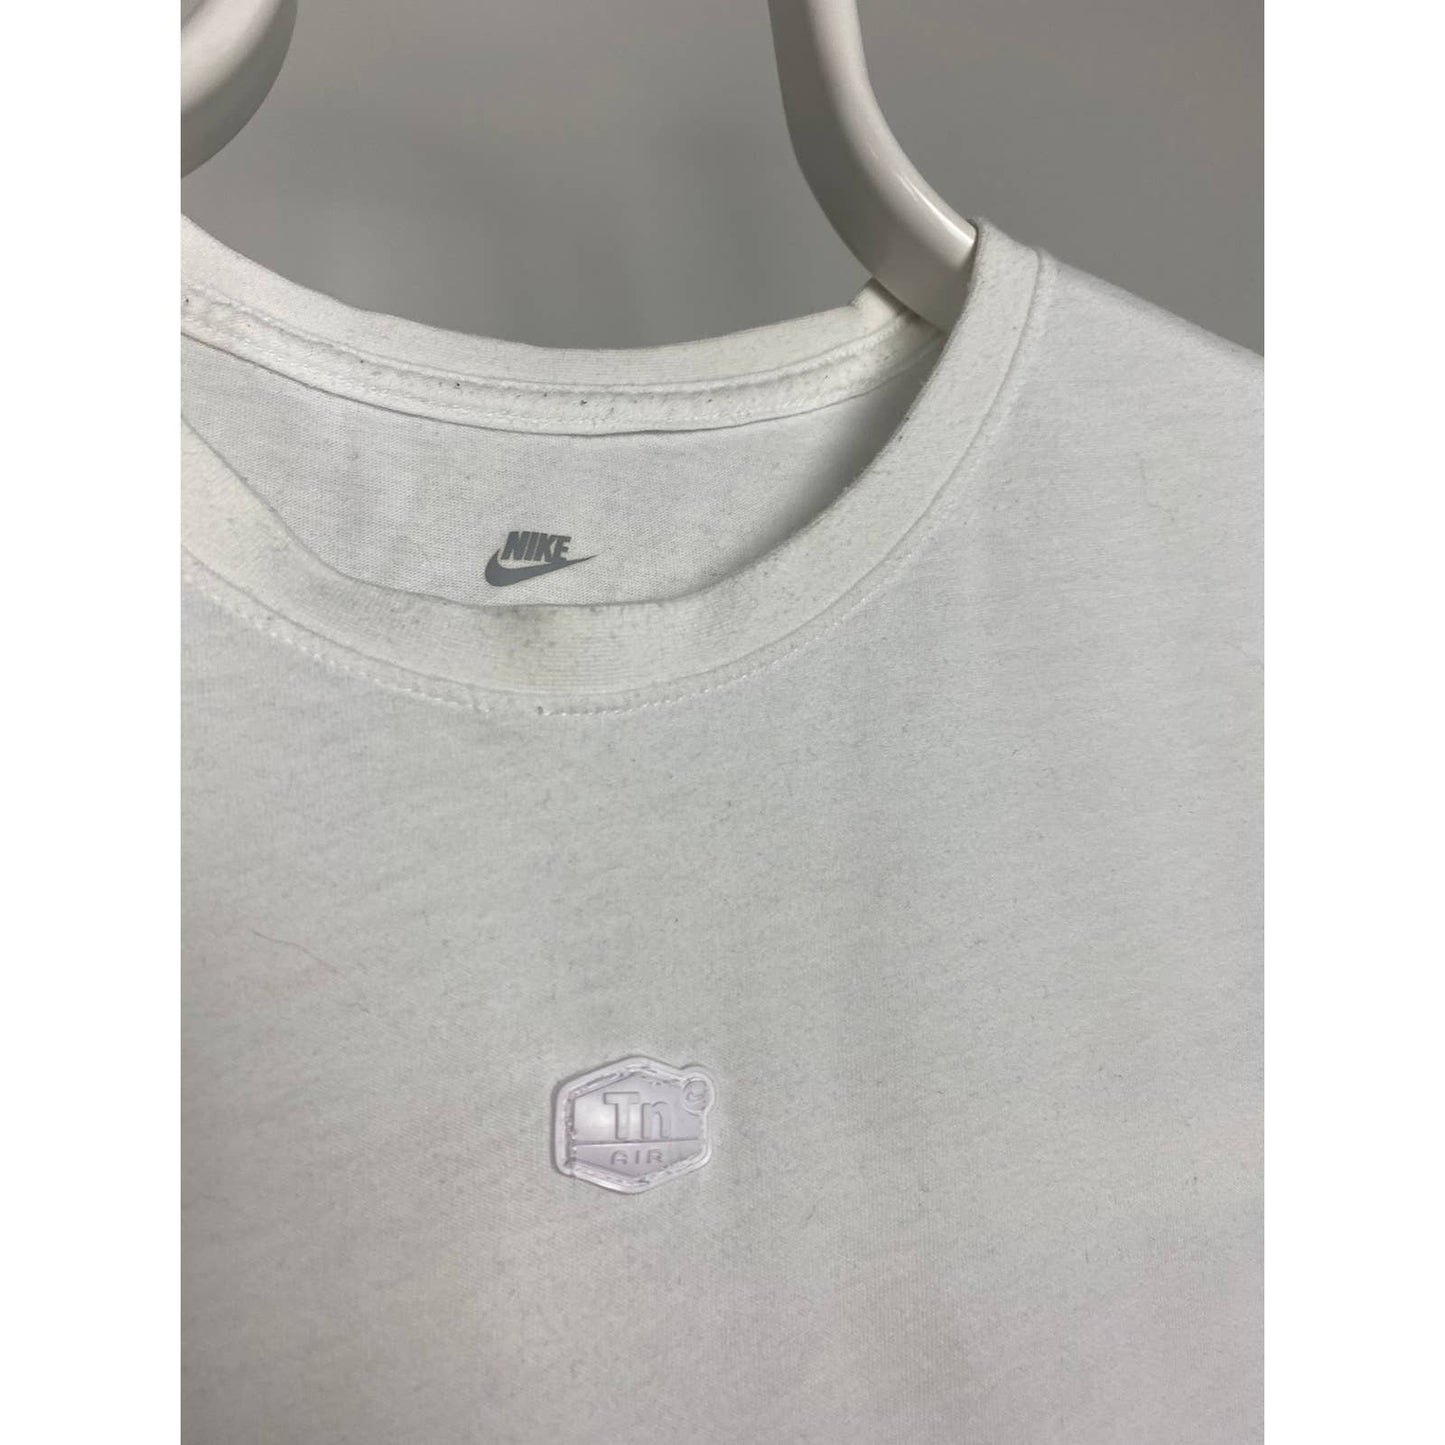 Nike TN white T-shirt central logo swoosh